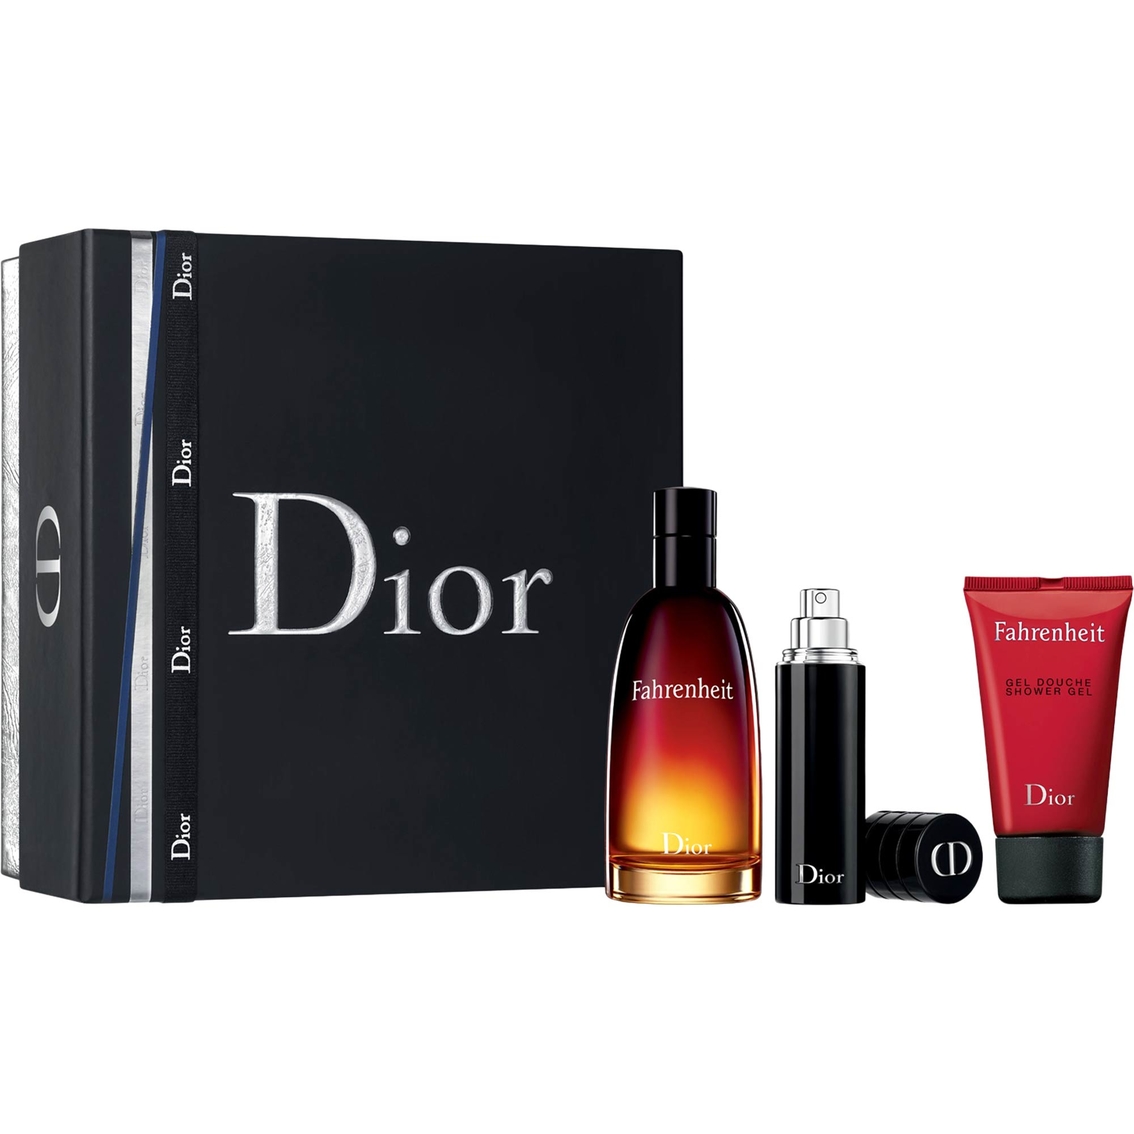 Dior Fahrenheit Gift Set | Gifts Sets 